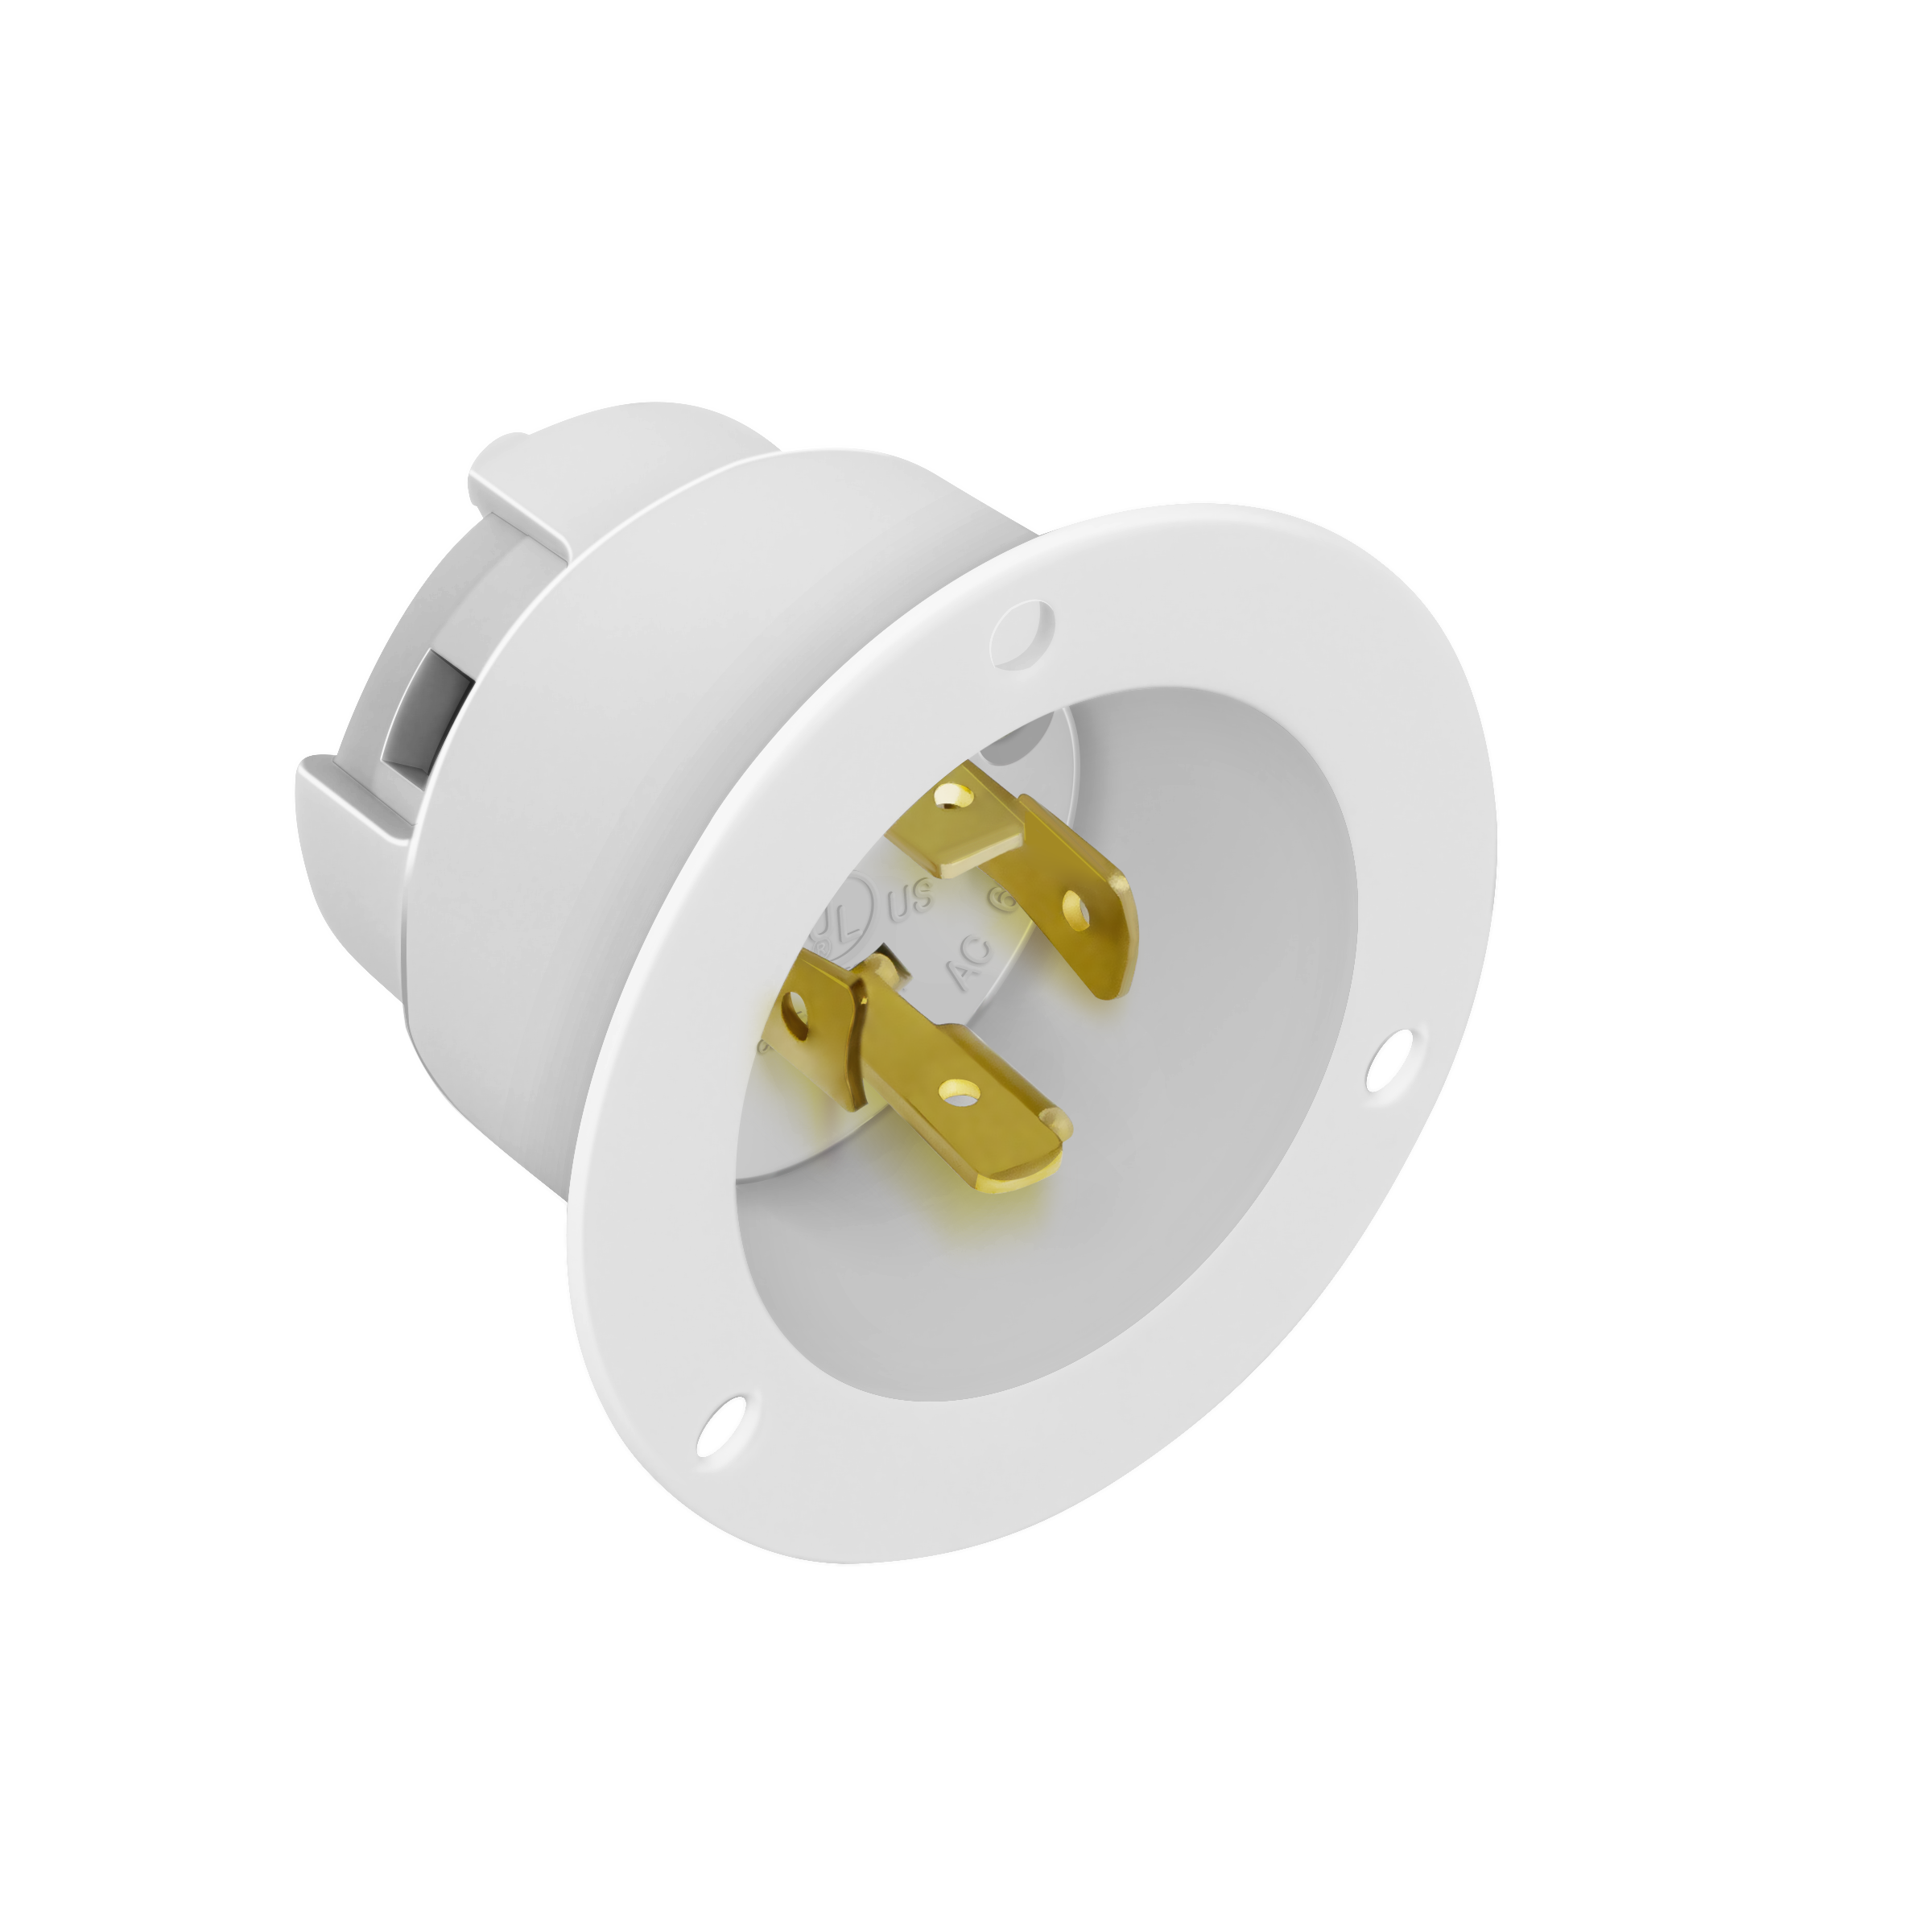 NEMA L14-20 Flanged Inlet Generator Plug Locking Receptacle Socket 20 Amp White